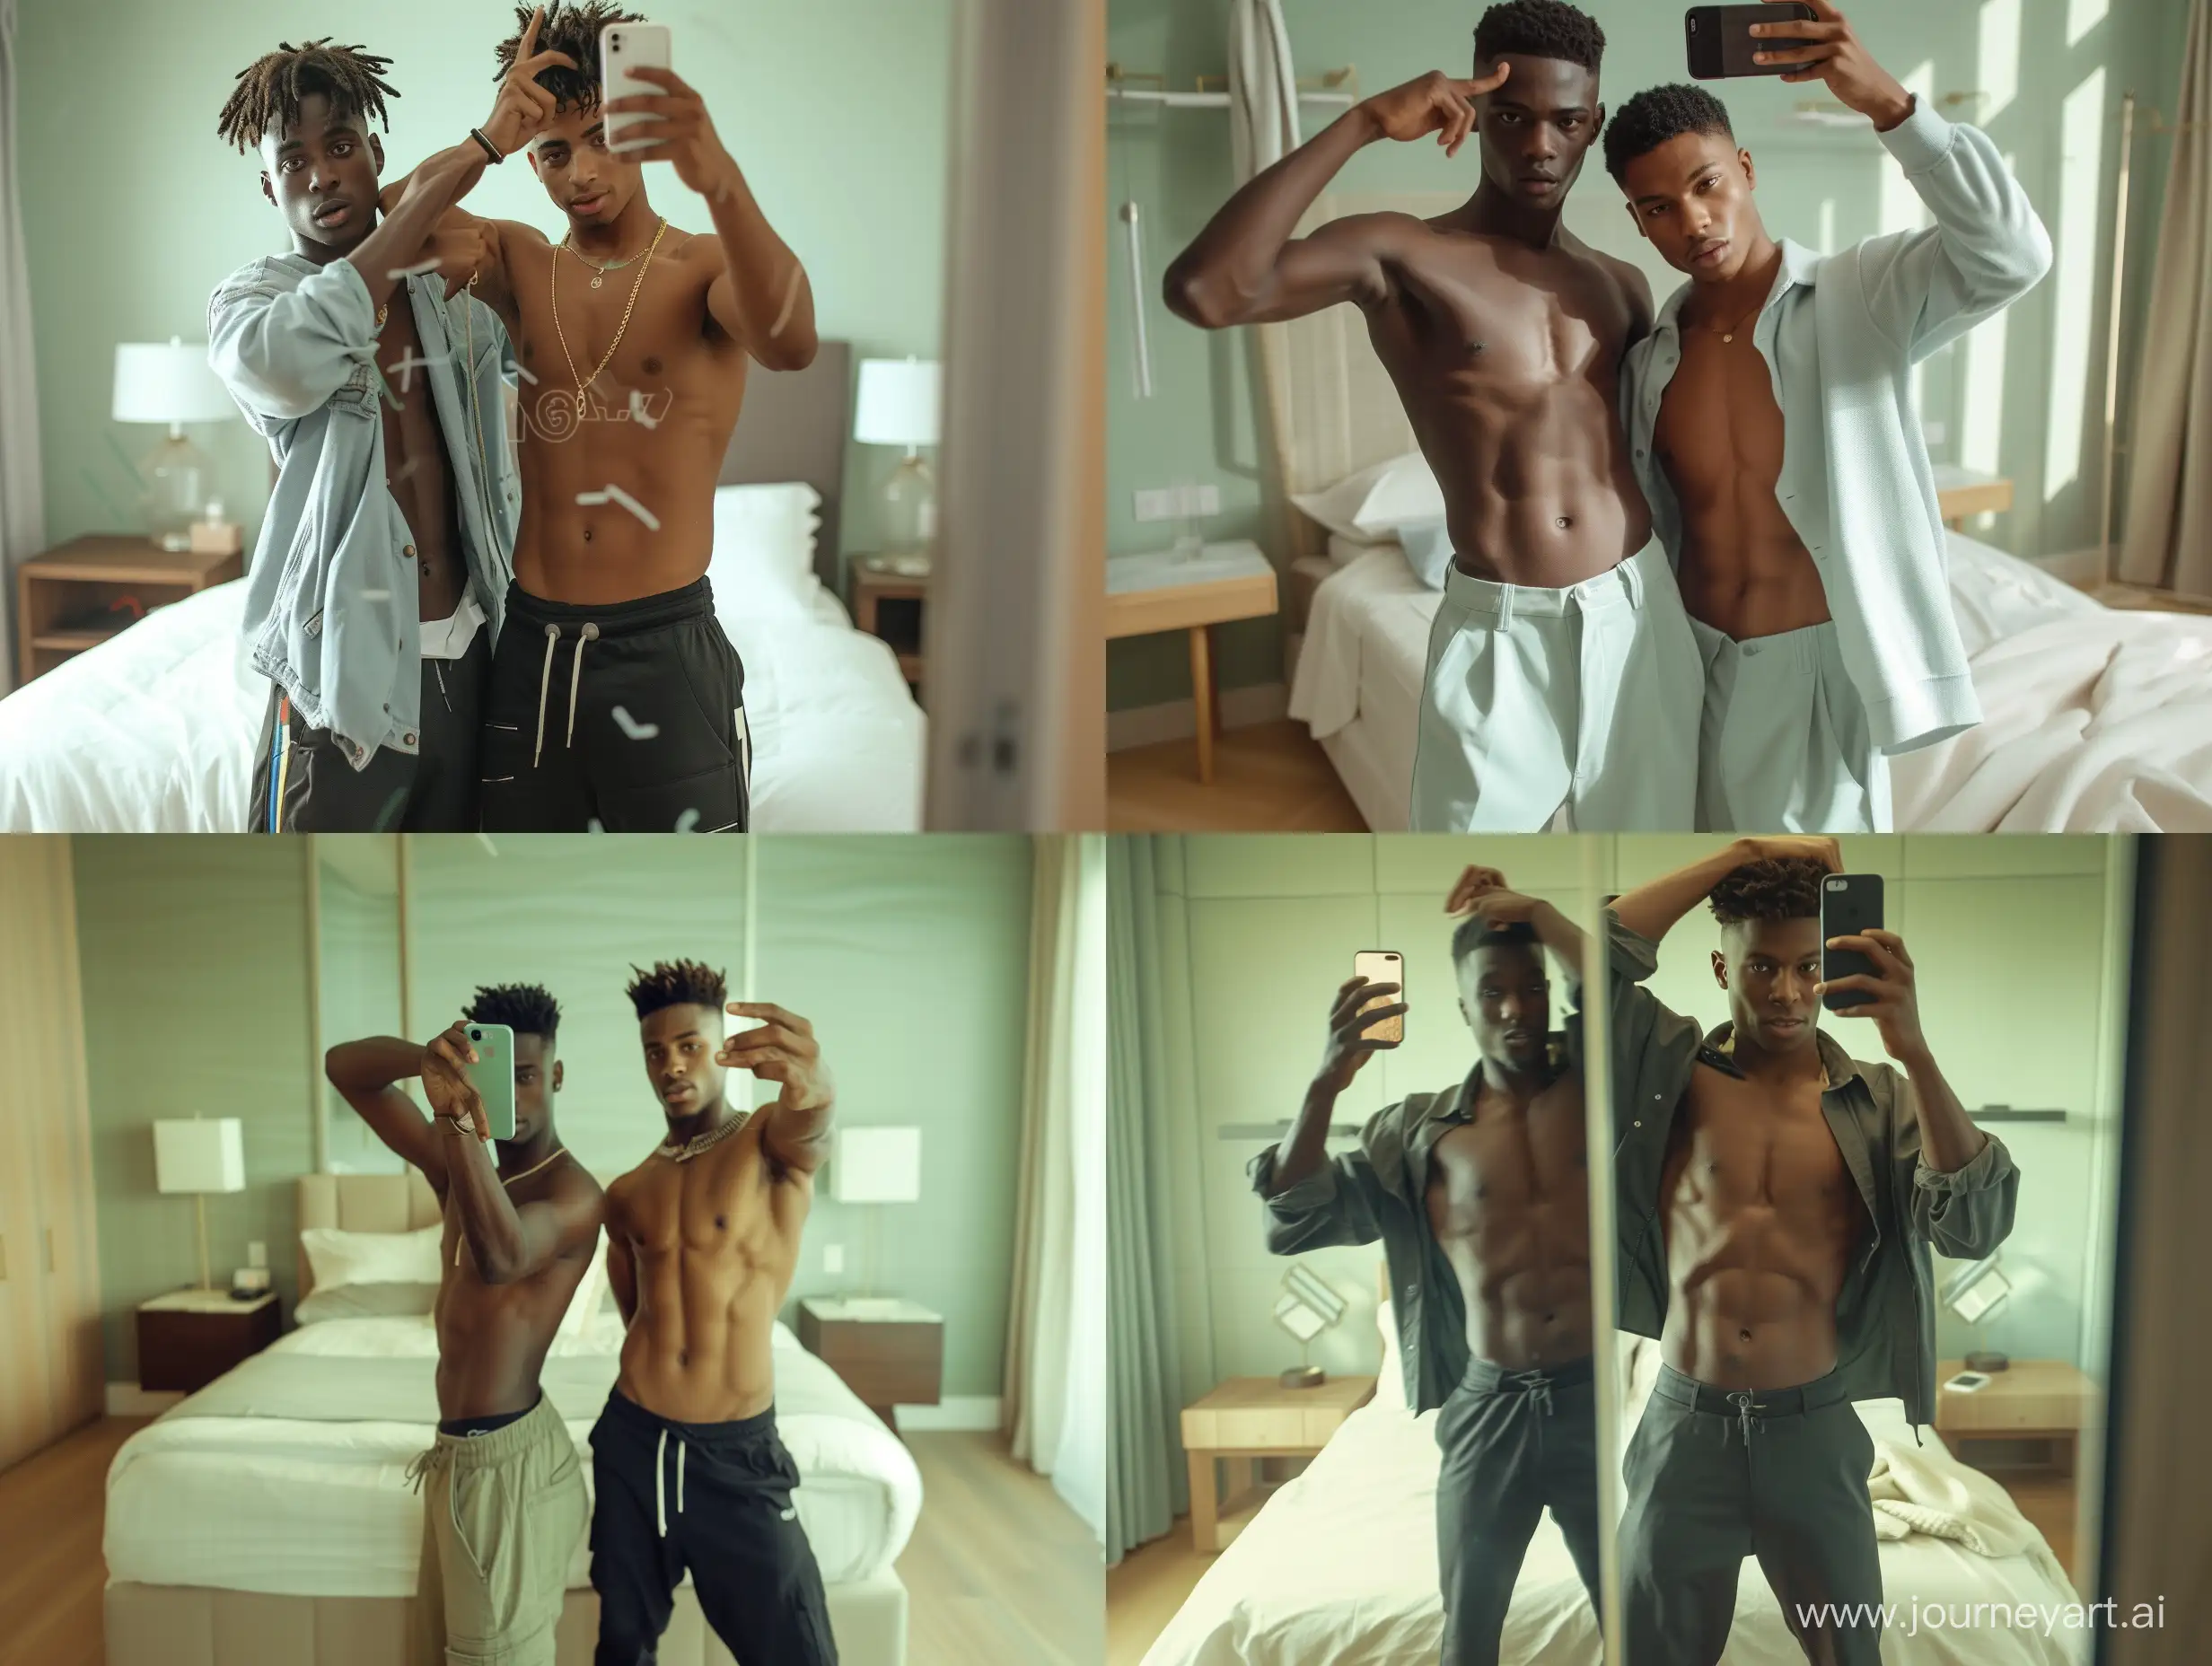 Young-Men-in-Modern-Bedroom-Taking-Mirror-Selfie-with-Abs-Display